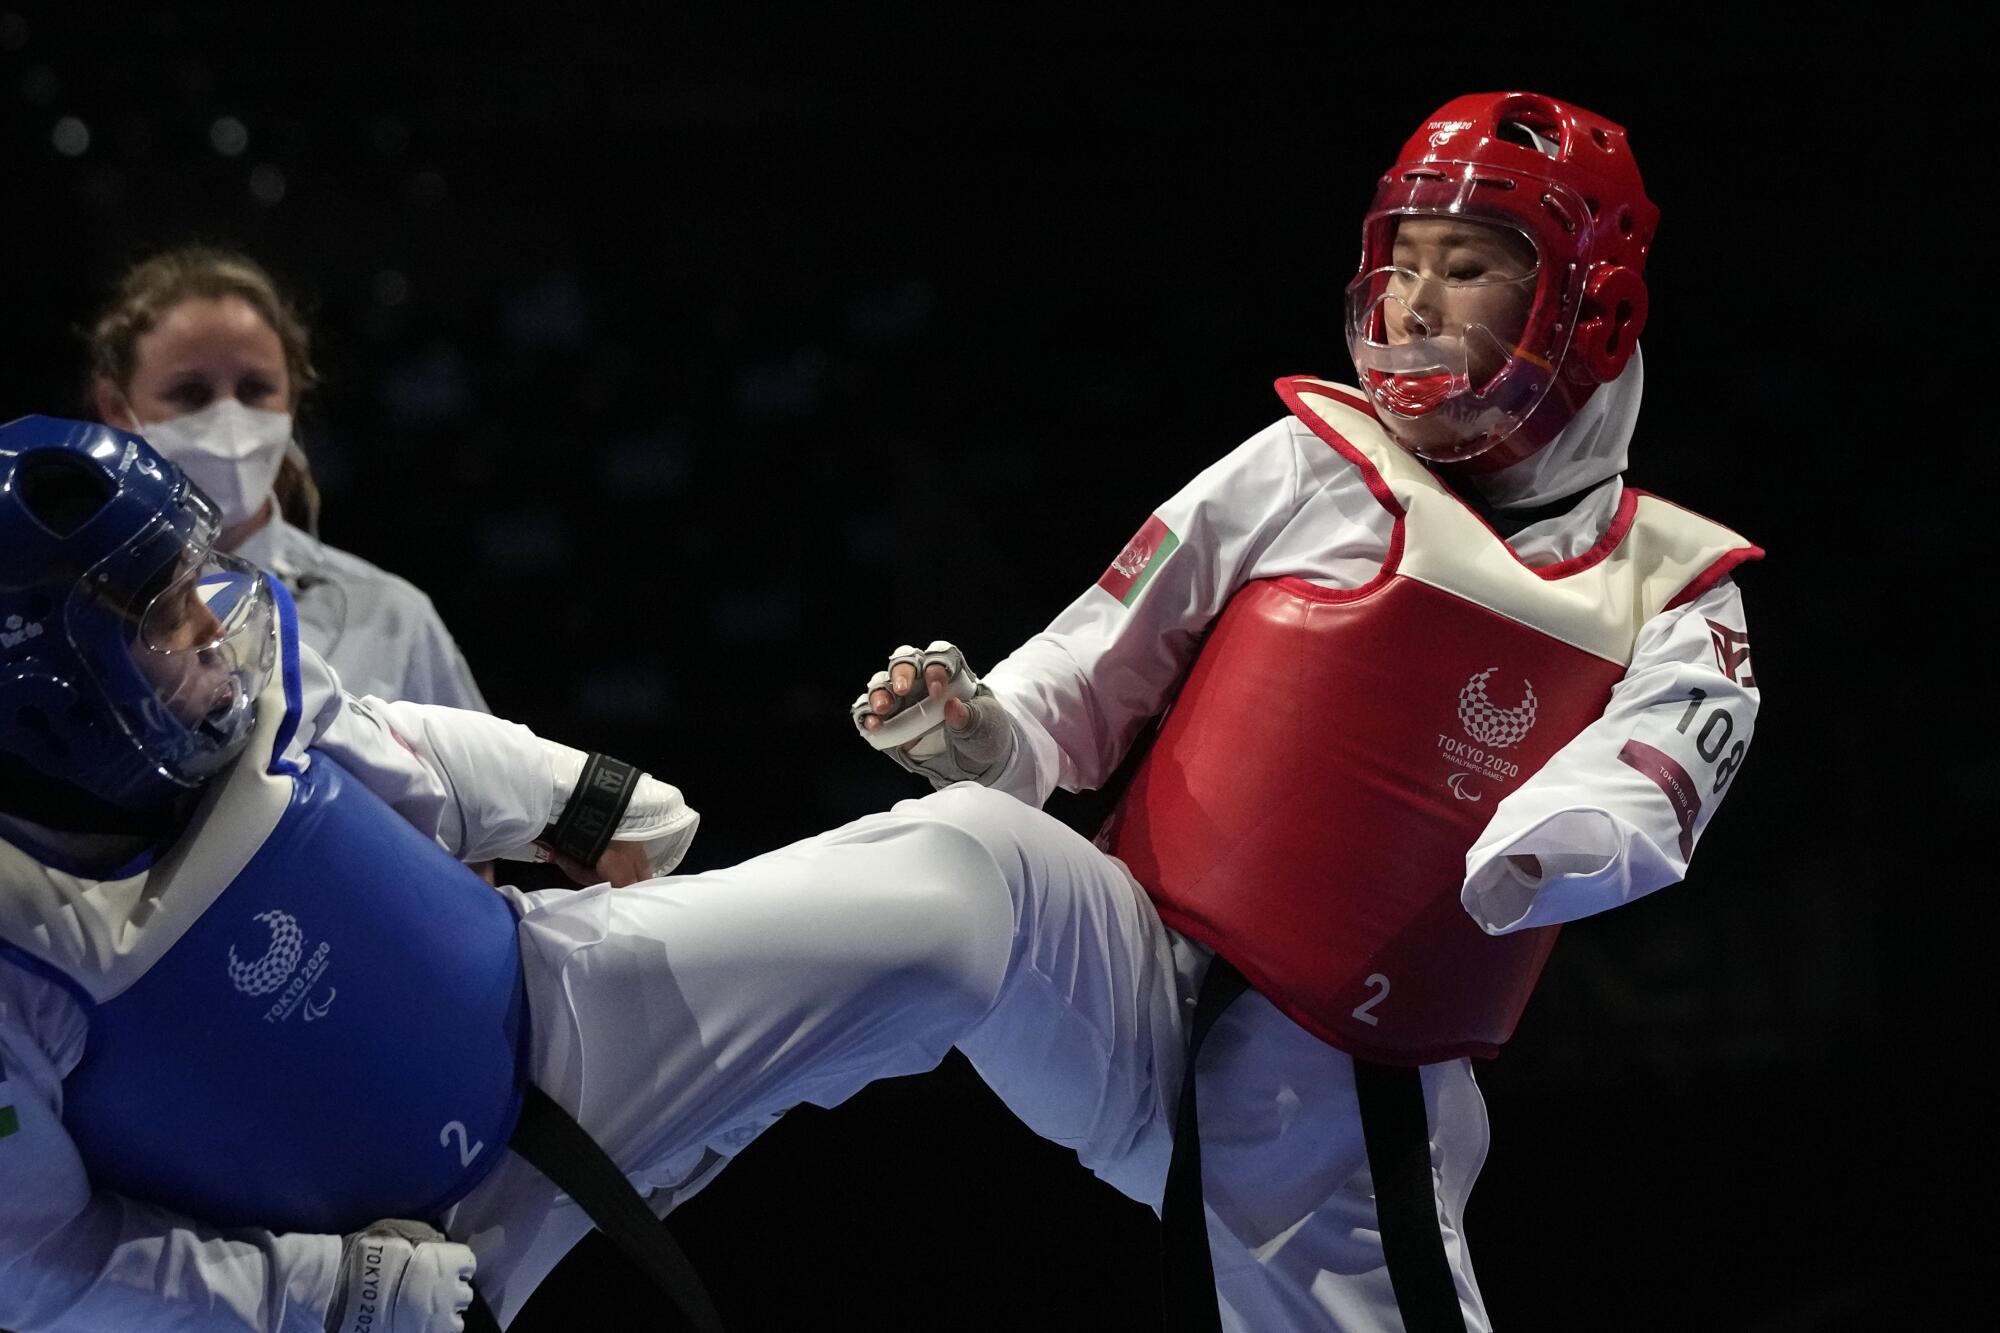 Afghanistan's Zakia Khudadadi competes against Ziyodakhon Isakova of Uzbekistan during their taekwondo match.